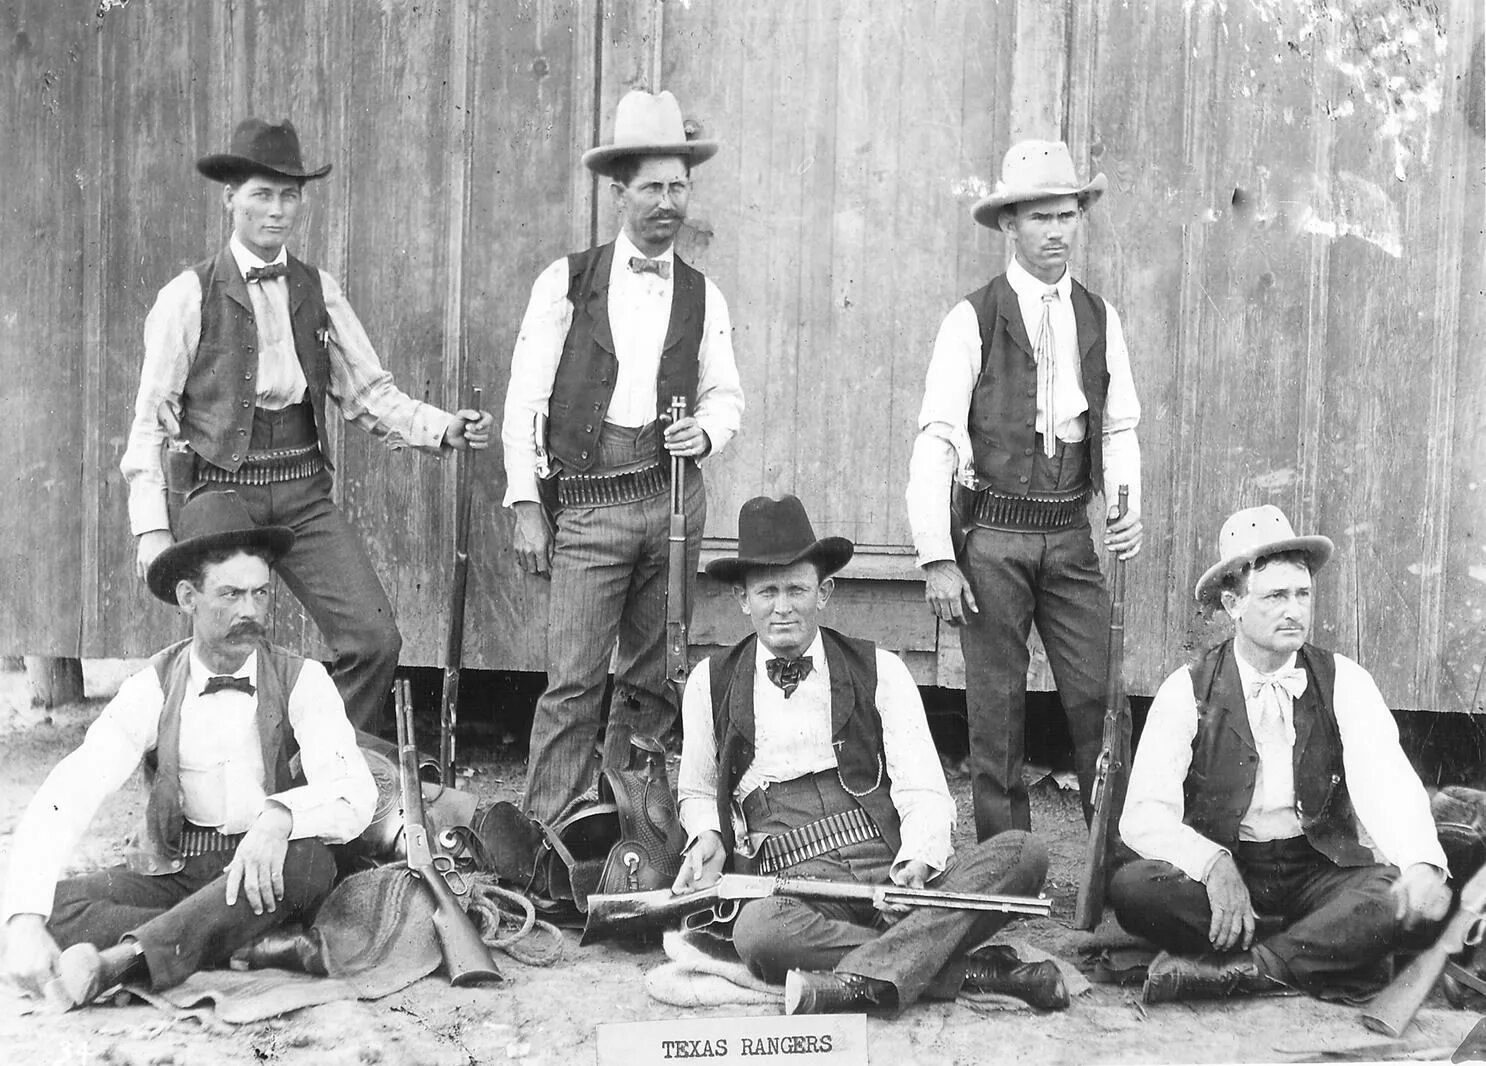 Техасские рейнджеры дикий Запад. Техасские рейнджеры 19 век. Техасские рейнджеры Терри. Фрэнк Хеймер Техасский рейнджер.